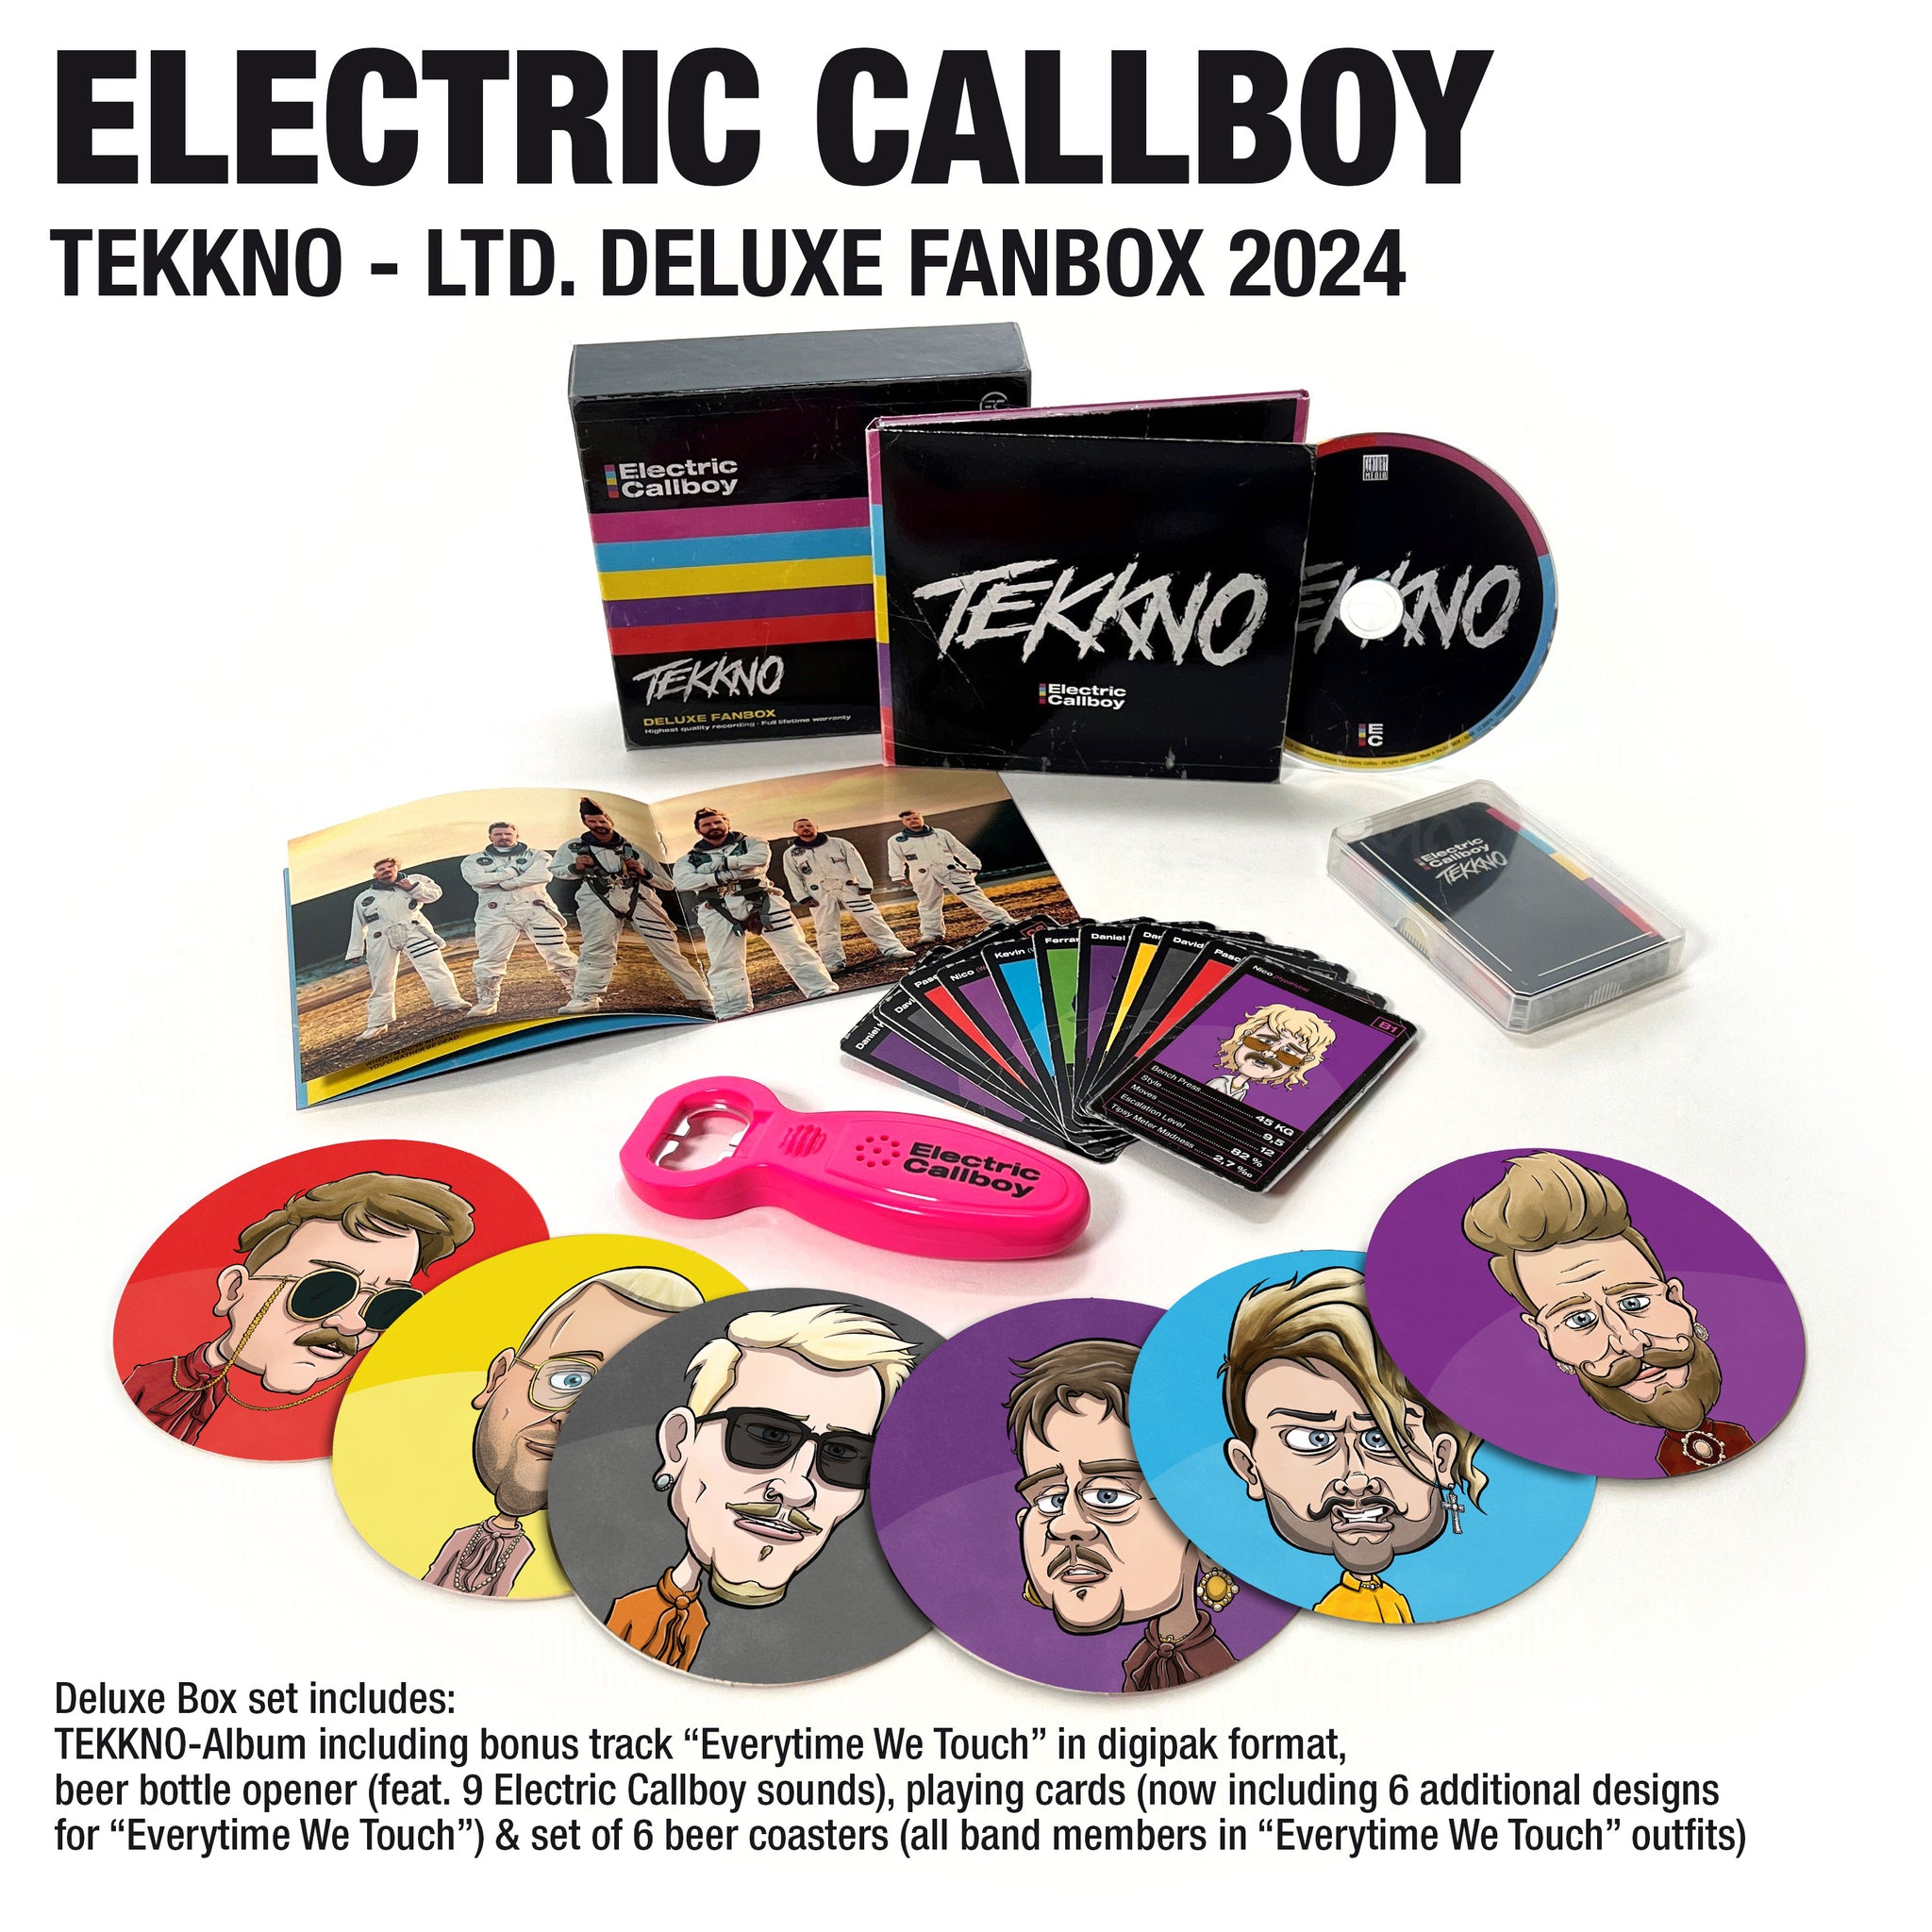 Electric Callboy - Tekkno -Ltd. Deluxe Fanbox 2024